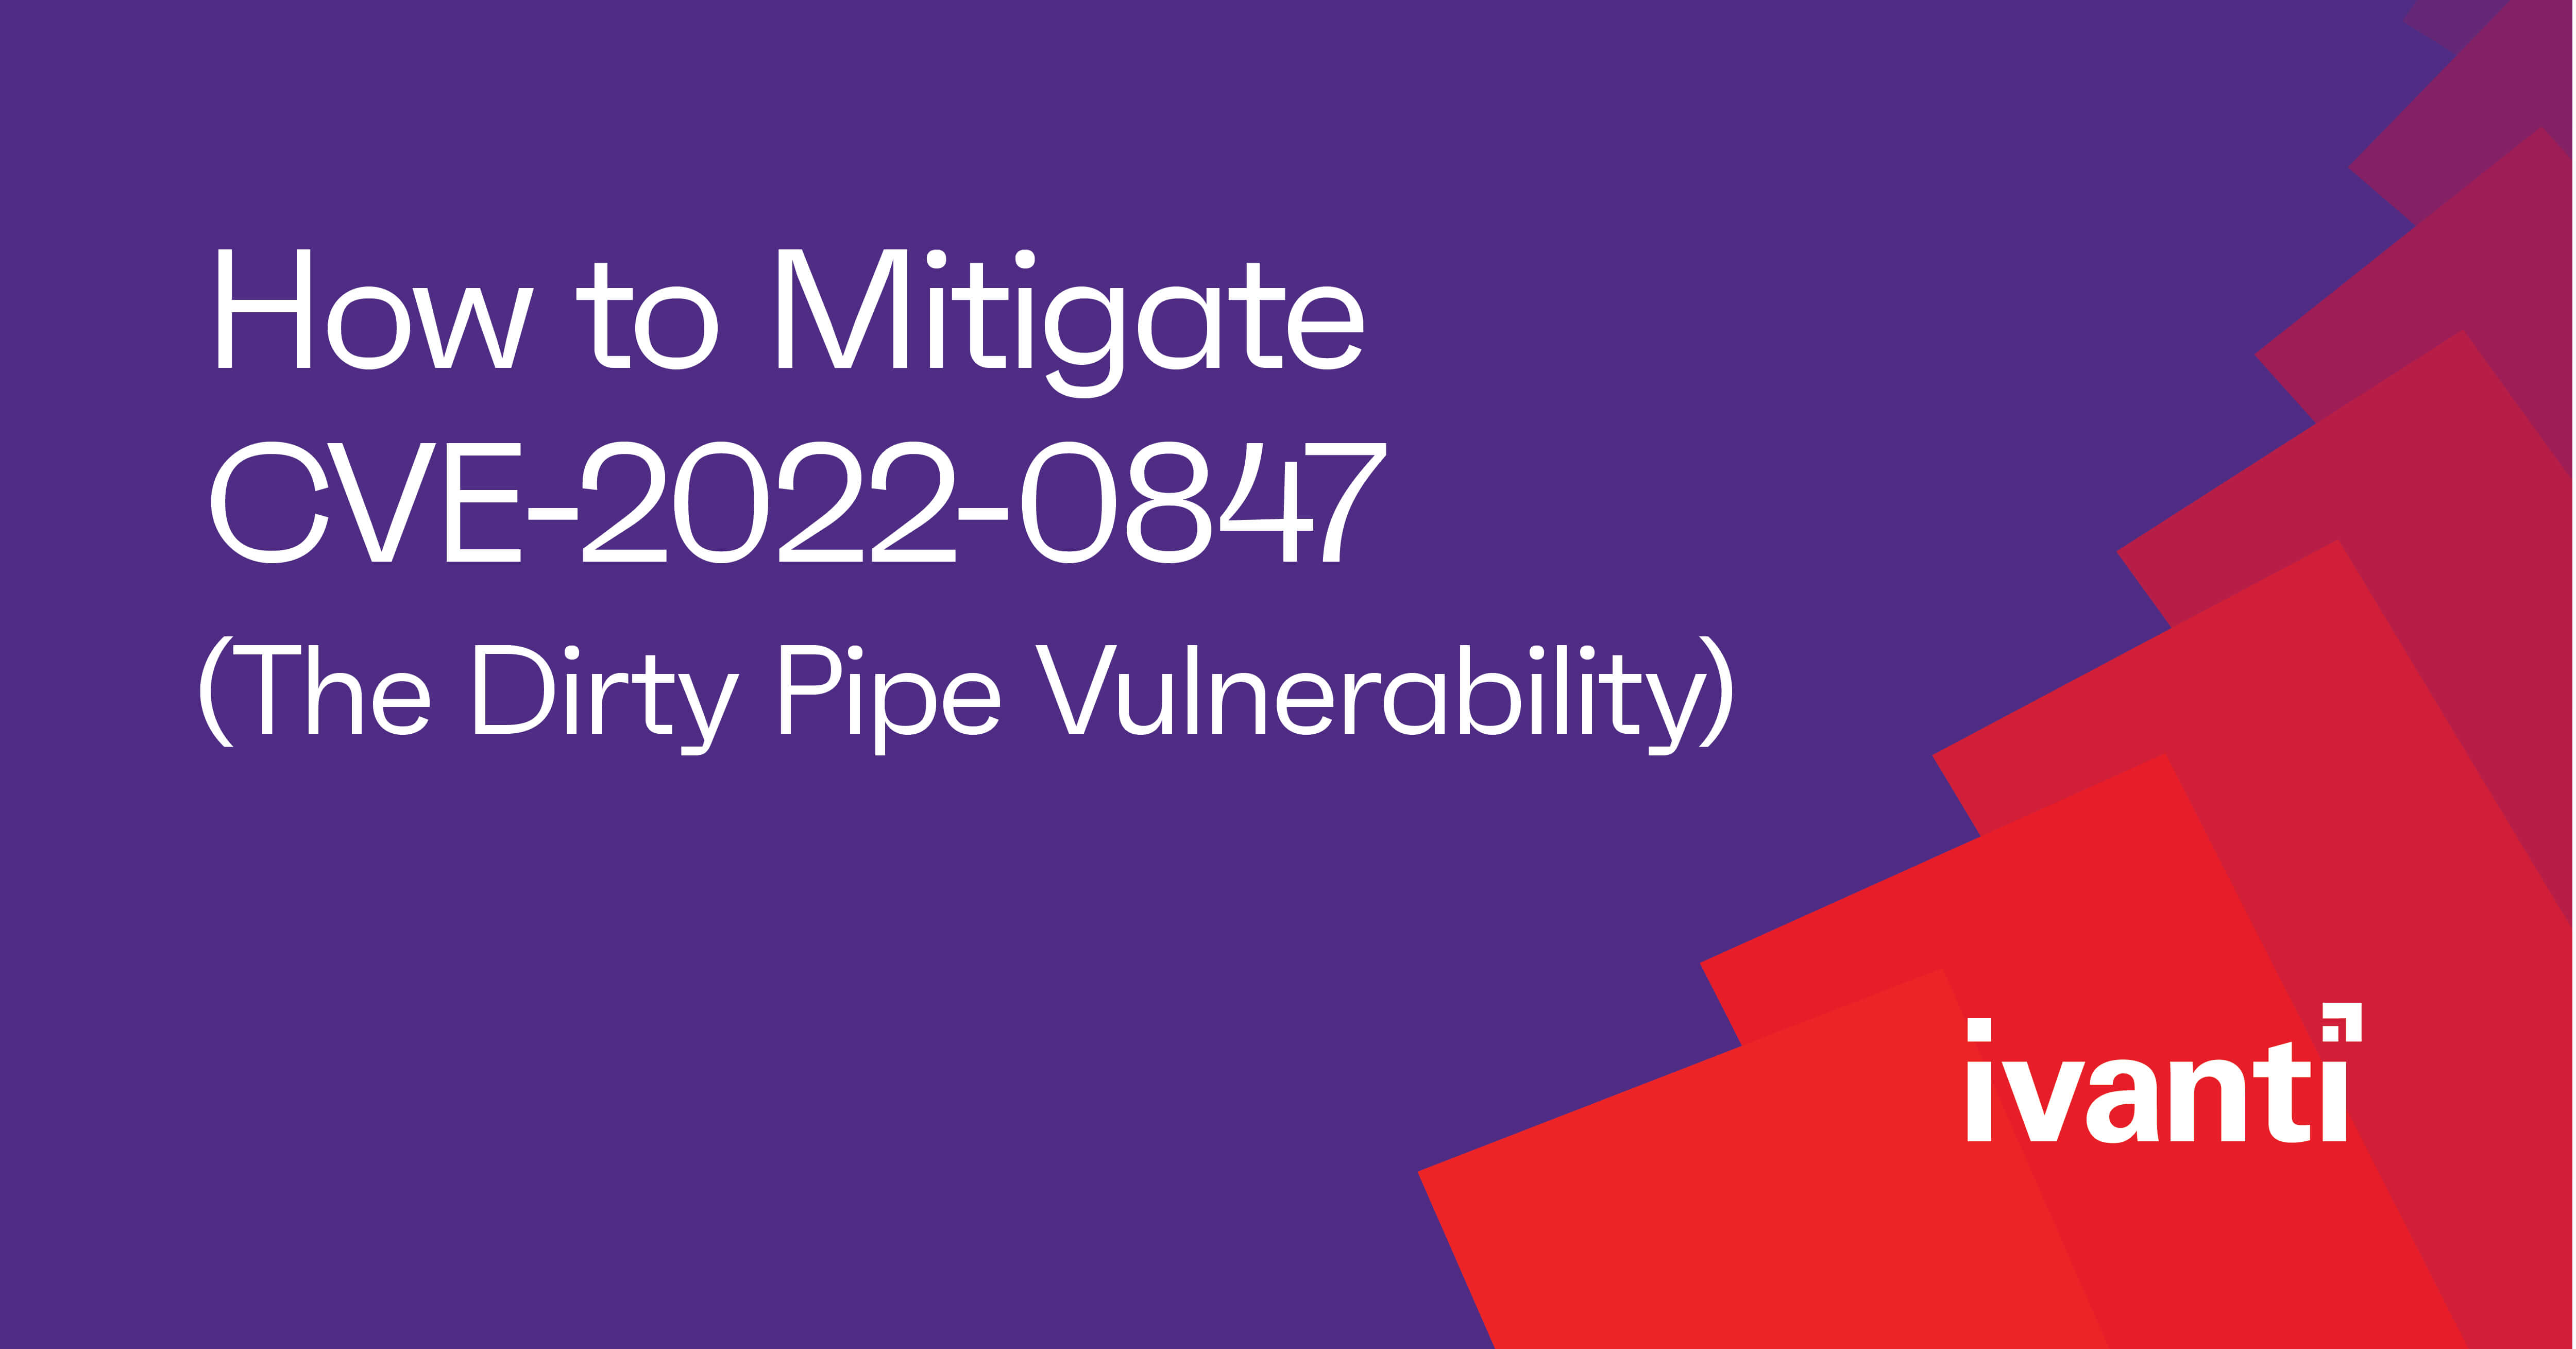 How to Mitigate CVE-2022-0847